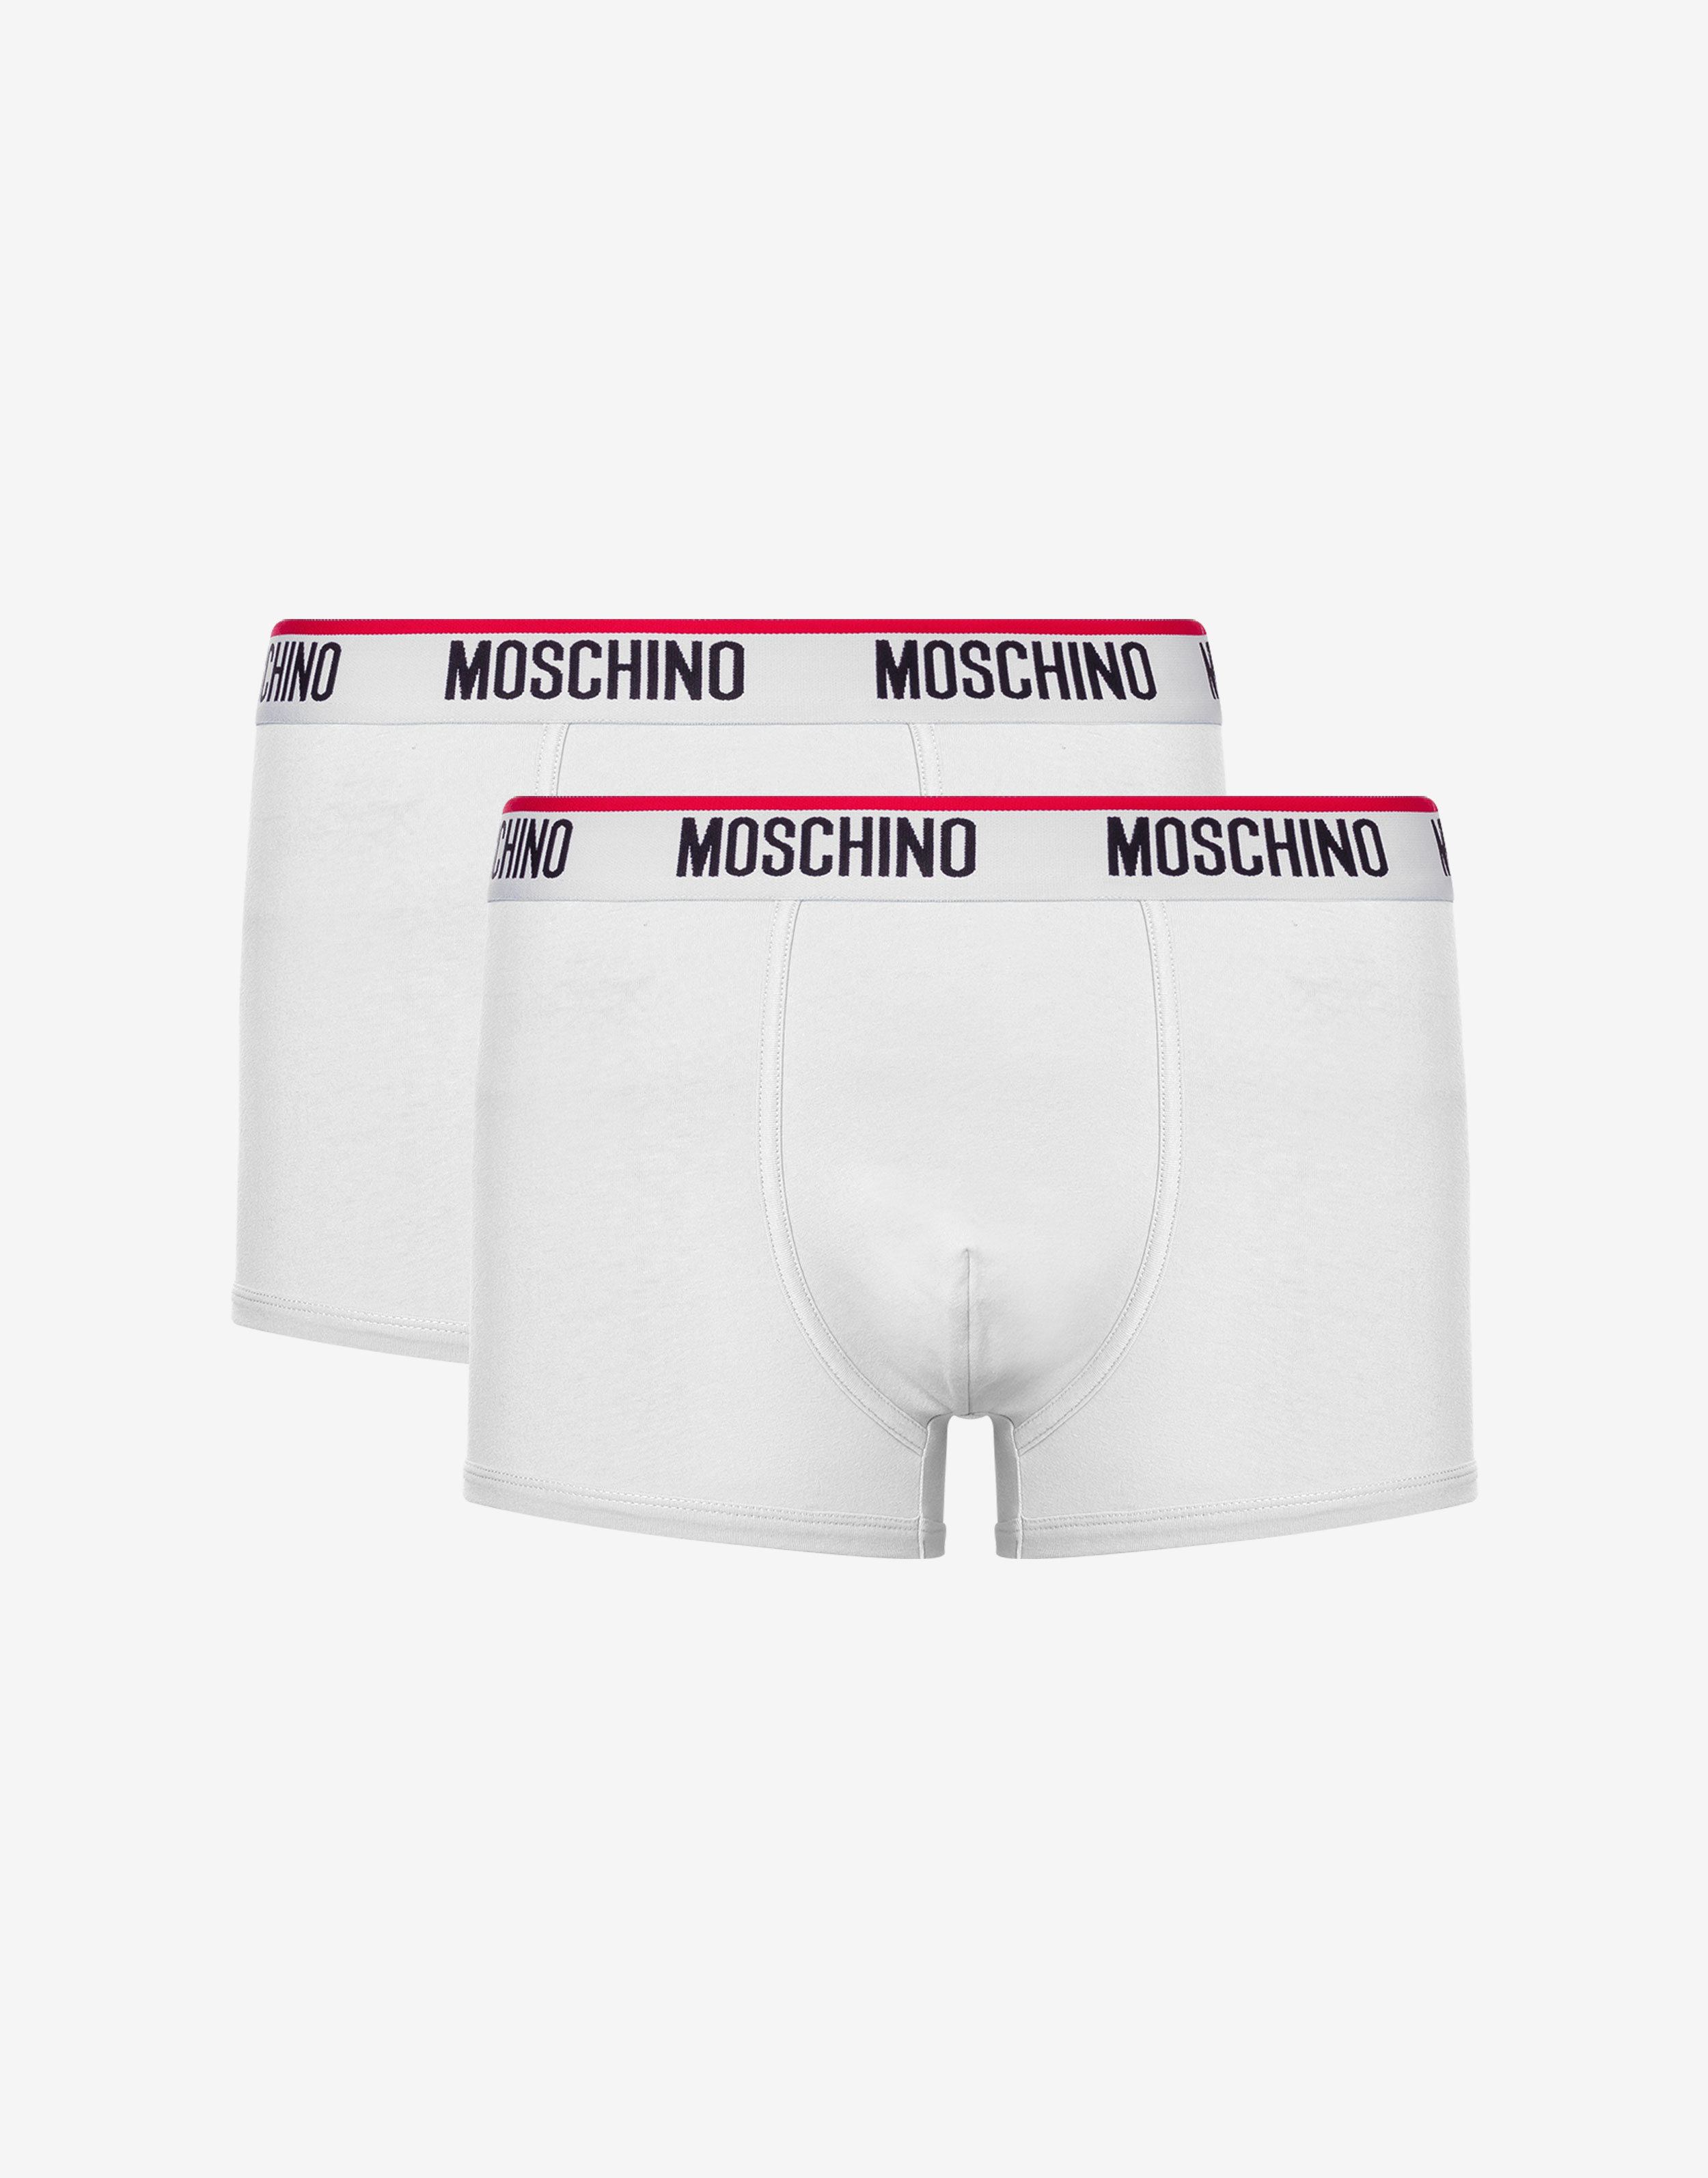 Moschino Underwear Tri Pack Boxers in Black, White & Grey : :  Fashion